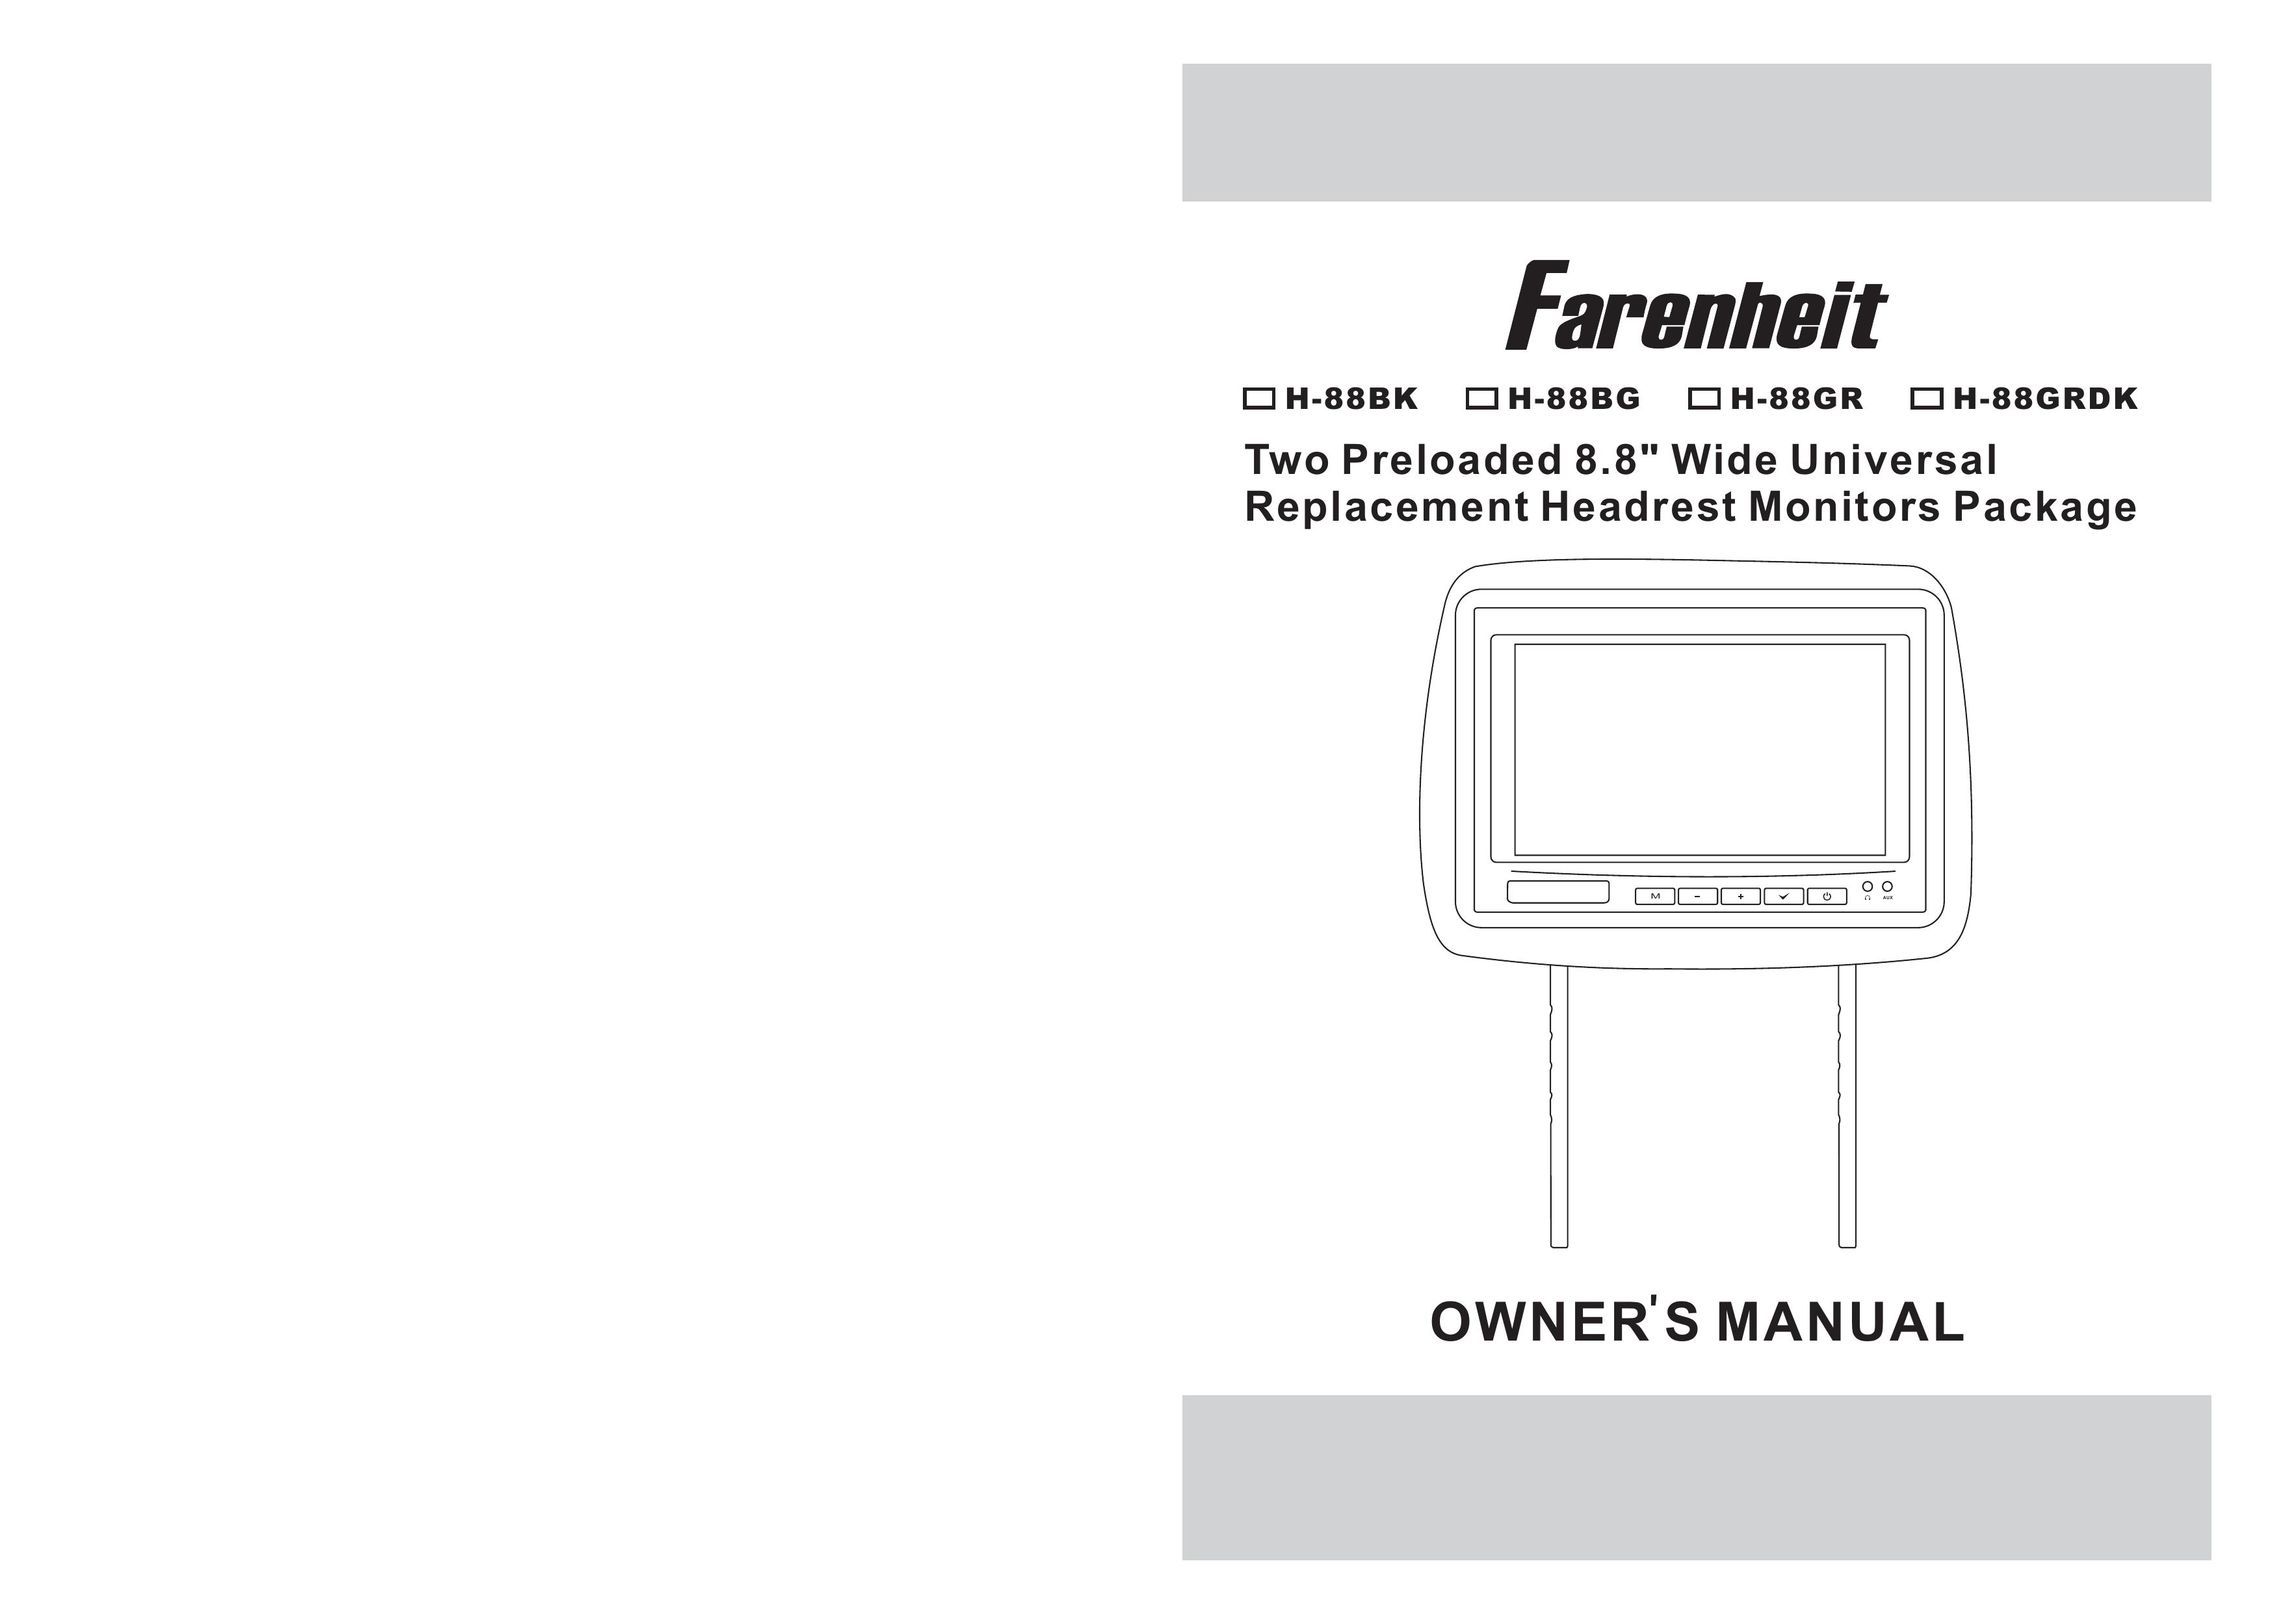 Farenheit Technologies H-88GR Car Video System User Manual